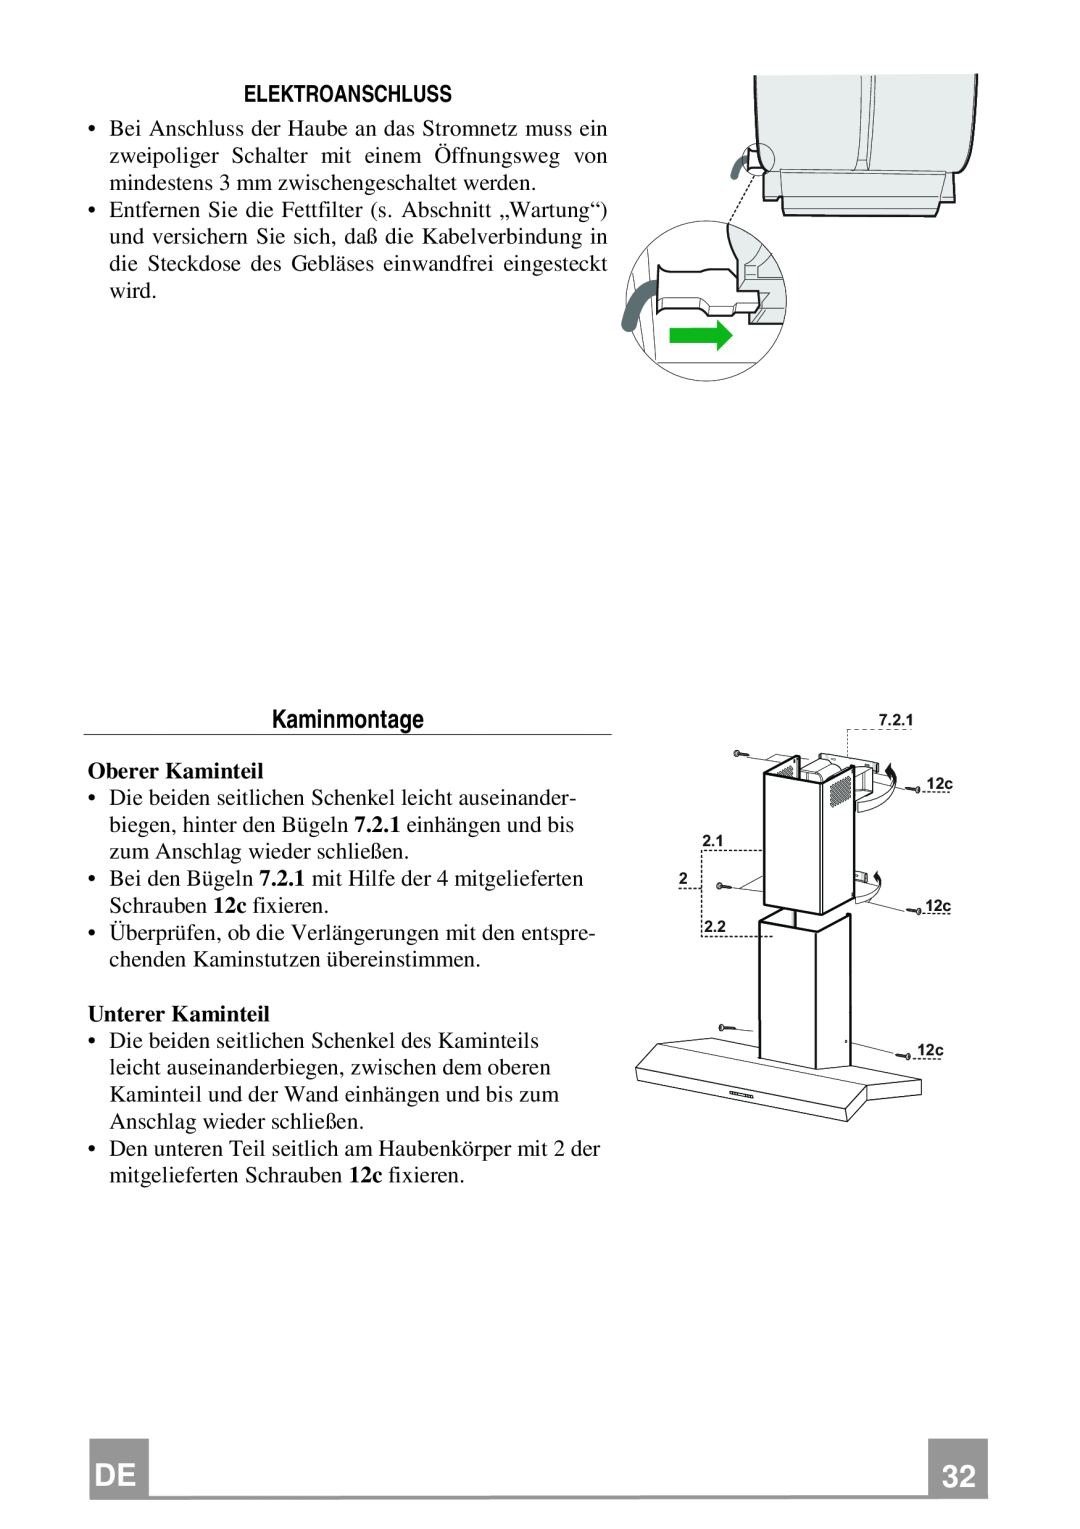 Franke Consumer Products FCH 906 manual Kaminmontage, Elektroanschluss 